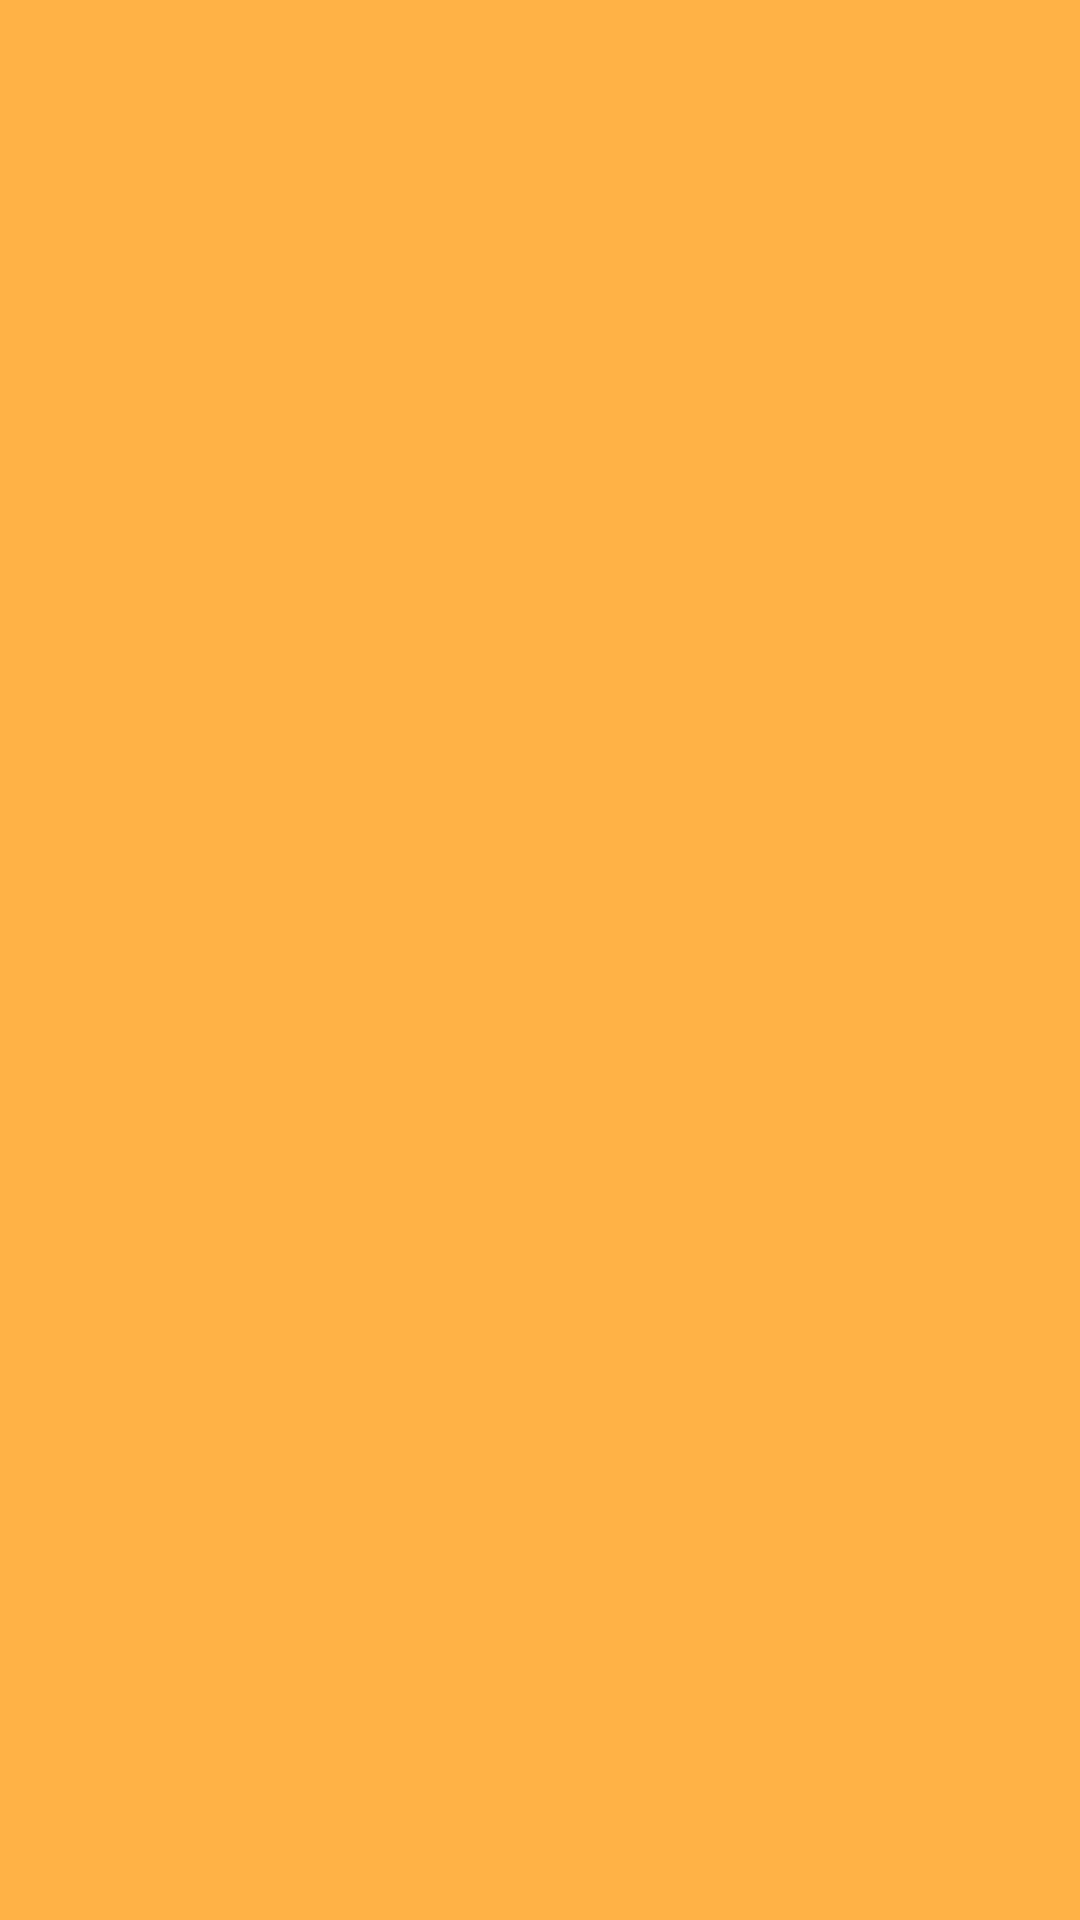 1080x1920 Pastel Orange Solid Color Background